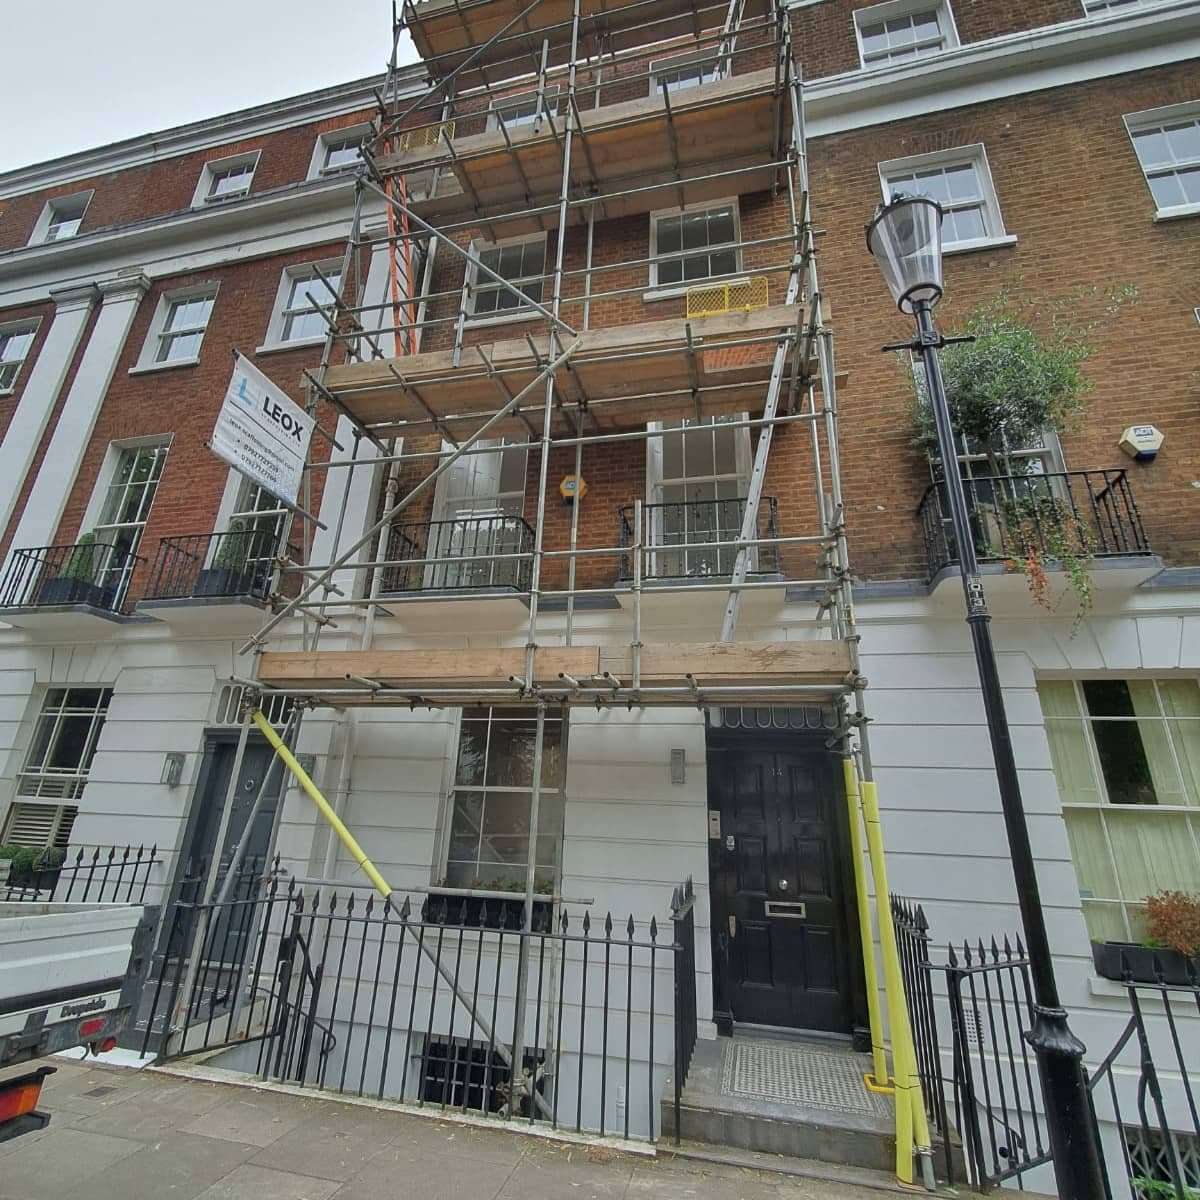 scaffolding company London staircase